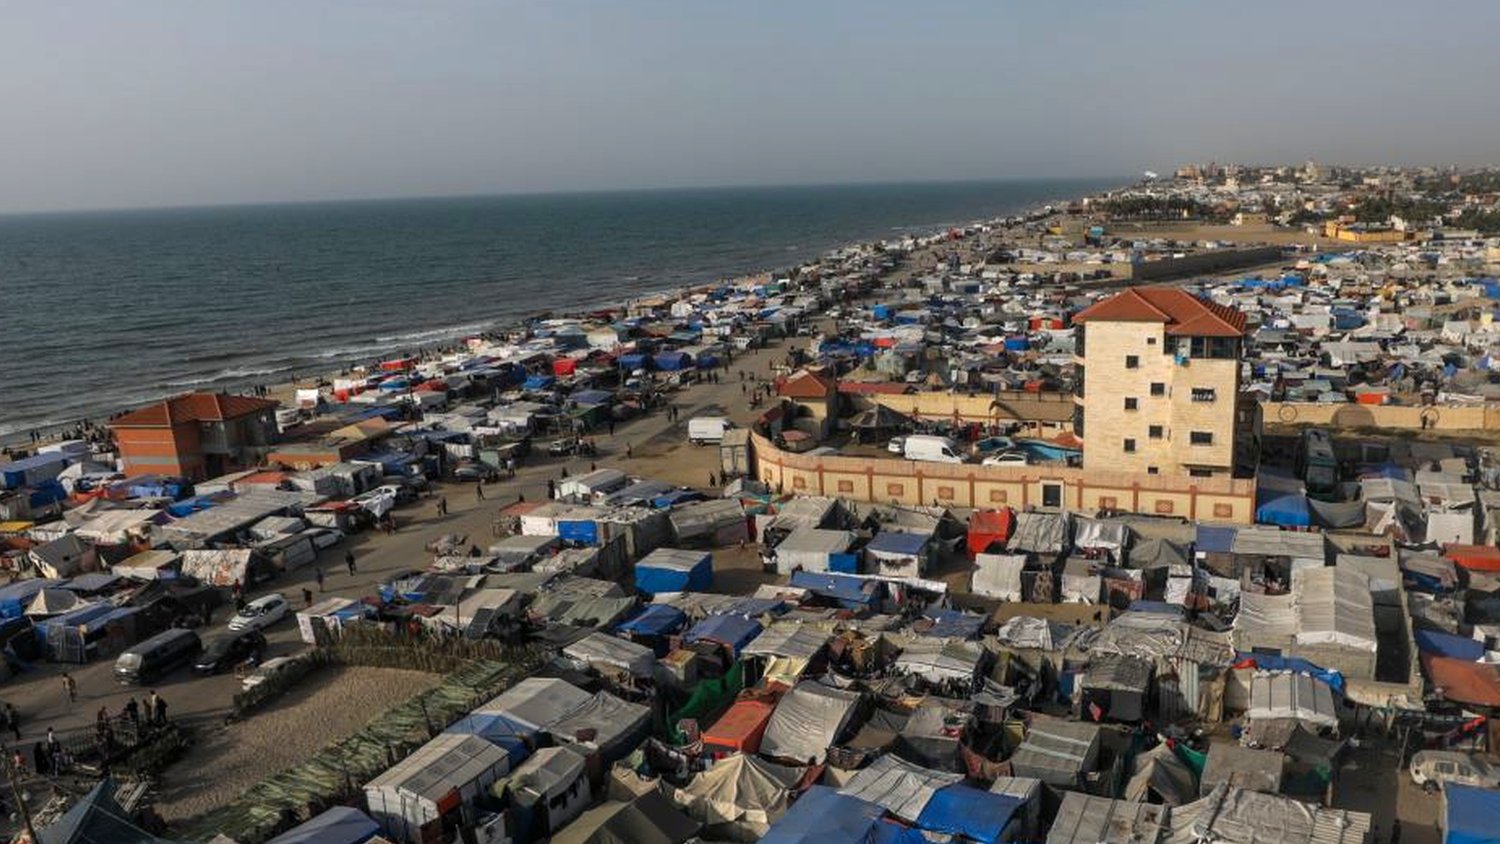 UNRWA: Restart aid to Palestinian UN agency, EU urges